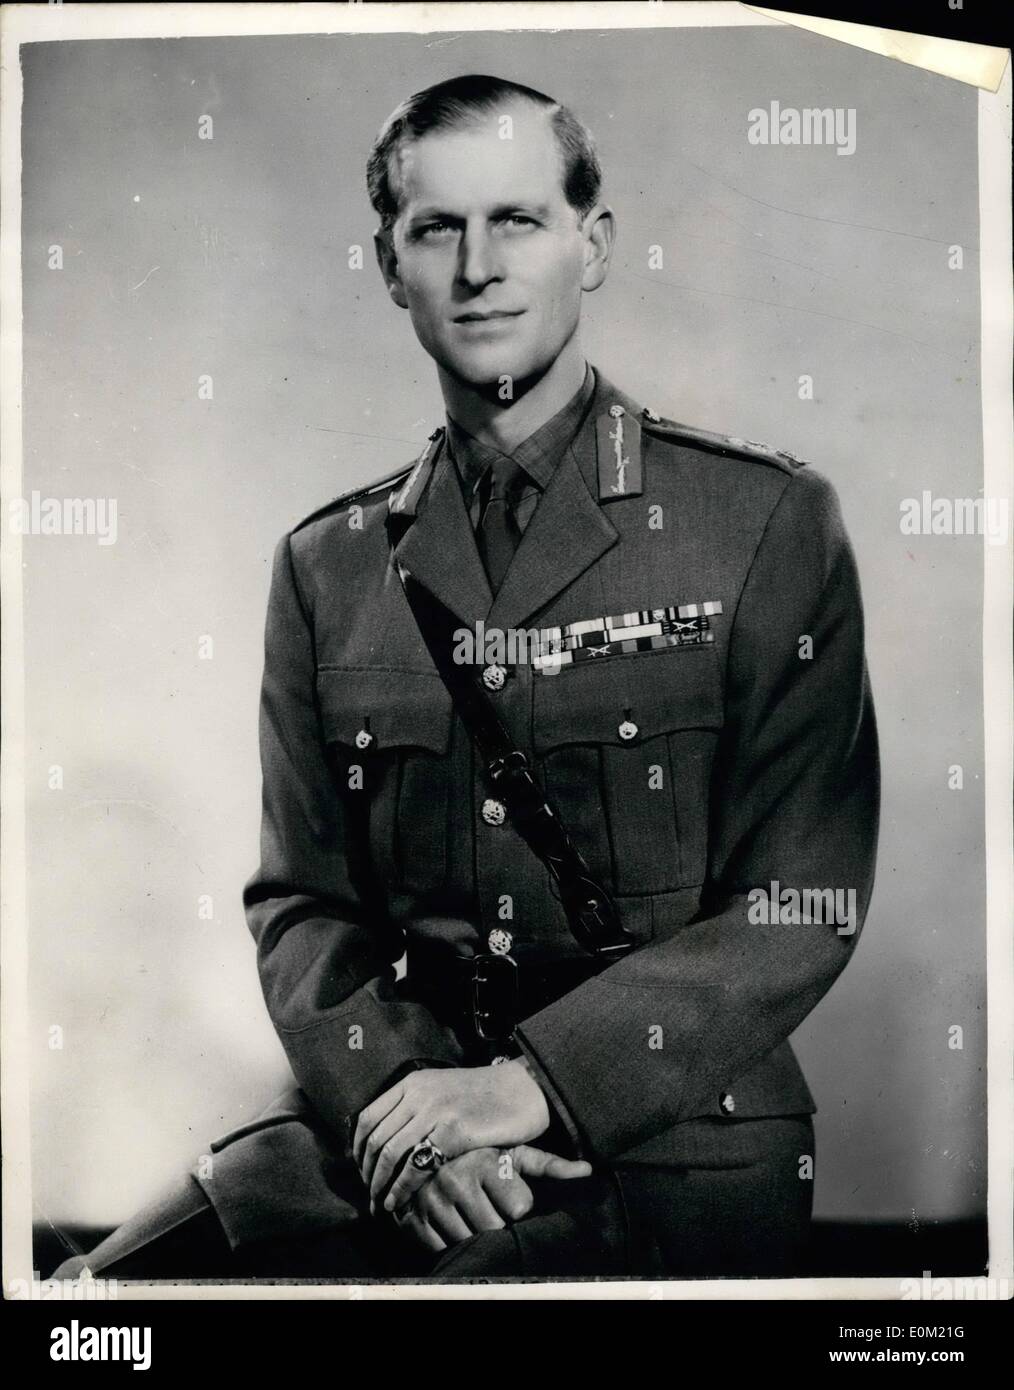 Mar. 03, 1953 - H.R.H. Duke of Edinburgh - Field Marshal of the Army Stock  Photo - Alamy